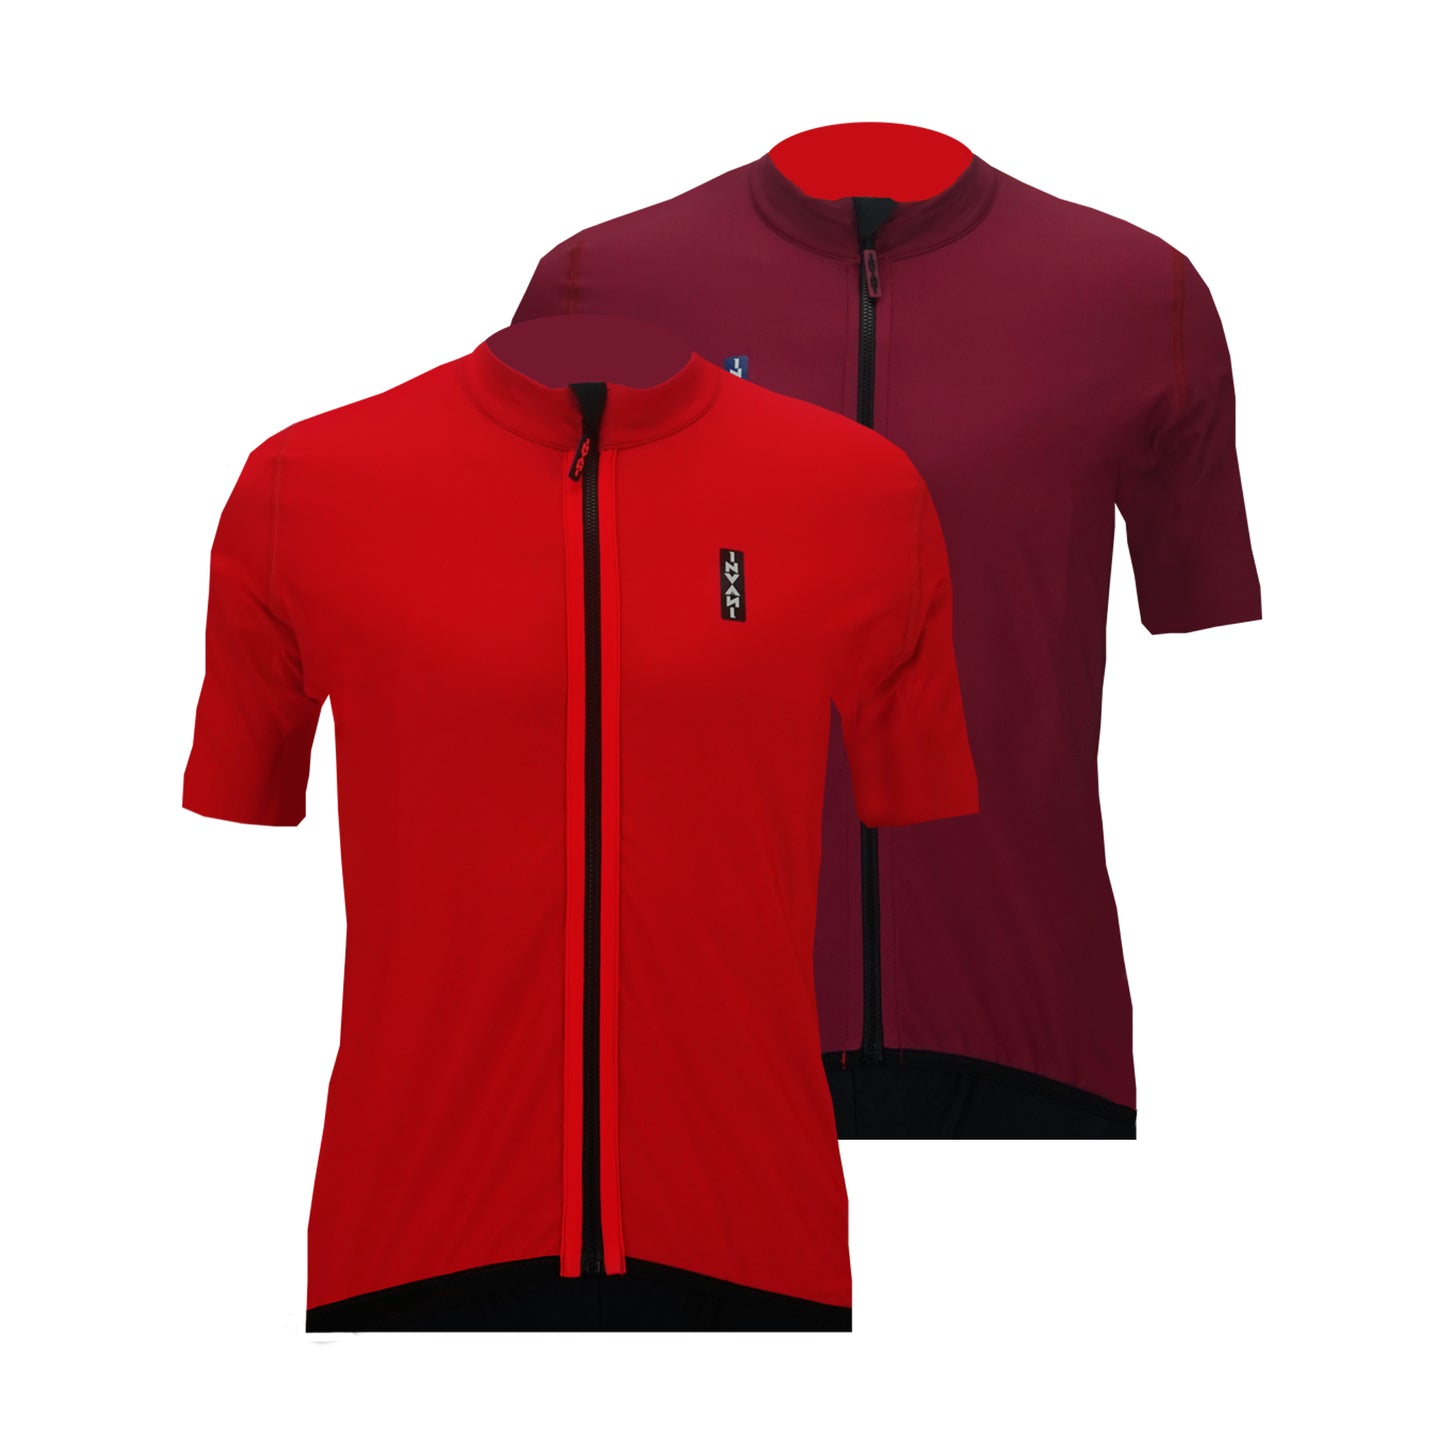 Regular Fit Reversible Jersey: Red / Burgundy (Men’s)